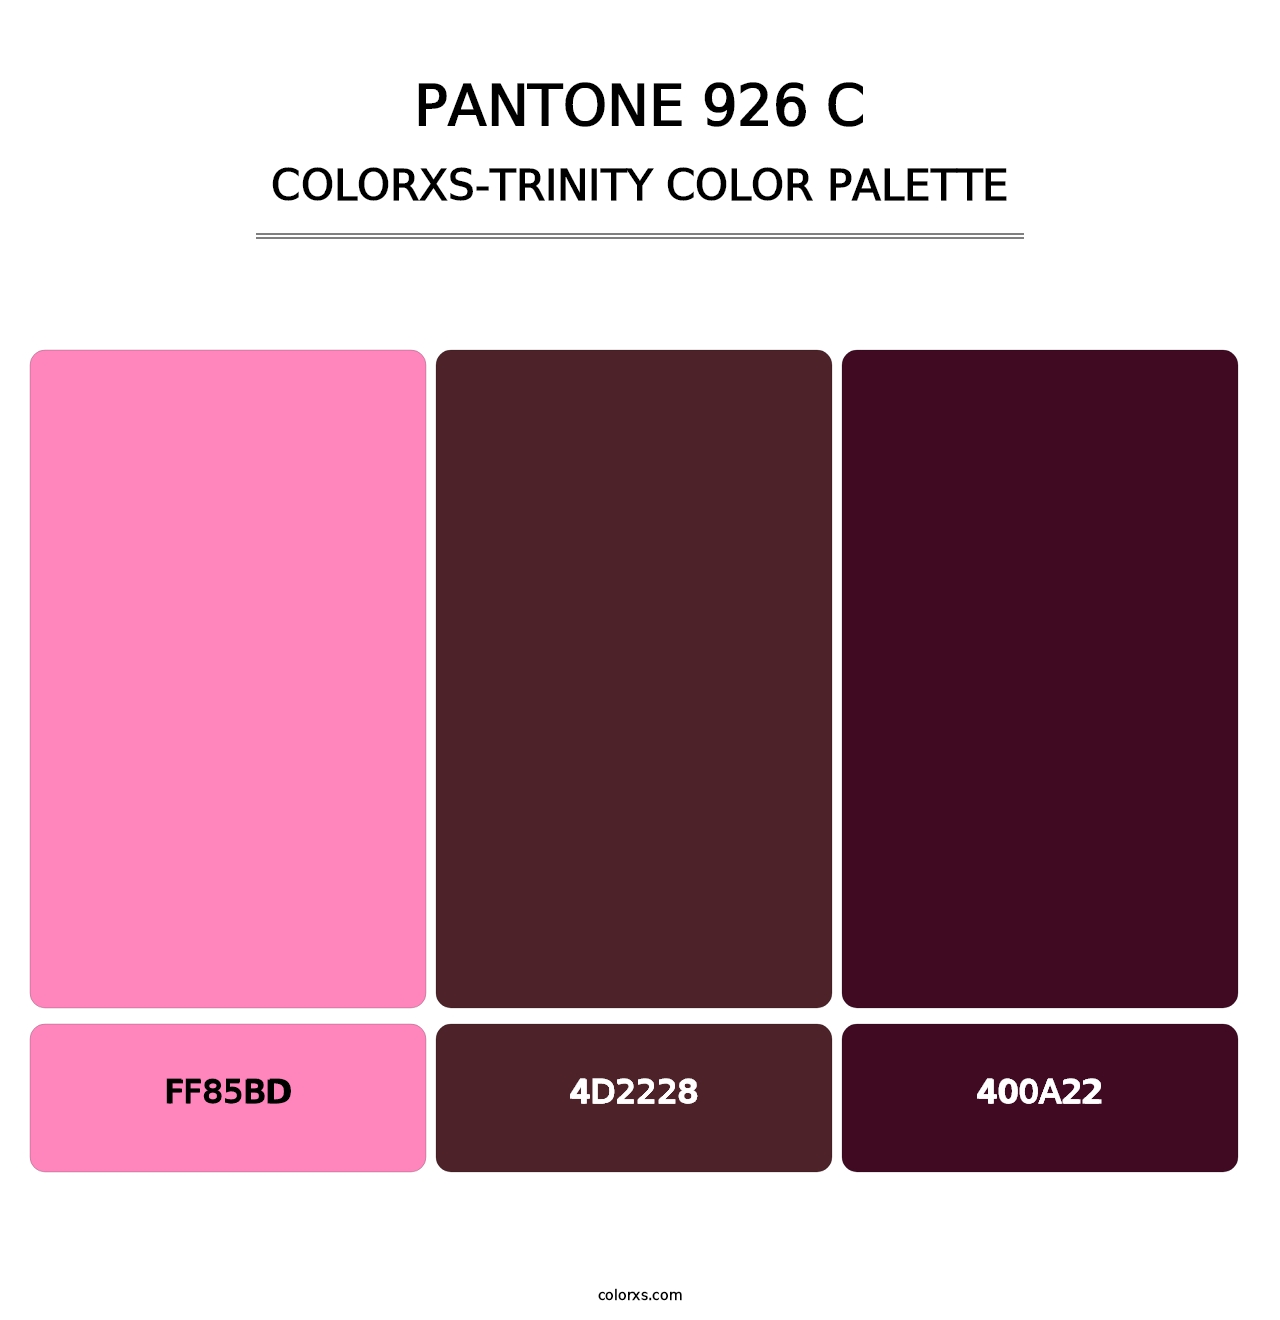 PANTONE 926 C - Colorxs Trinity Palette